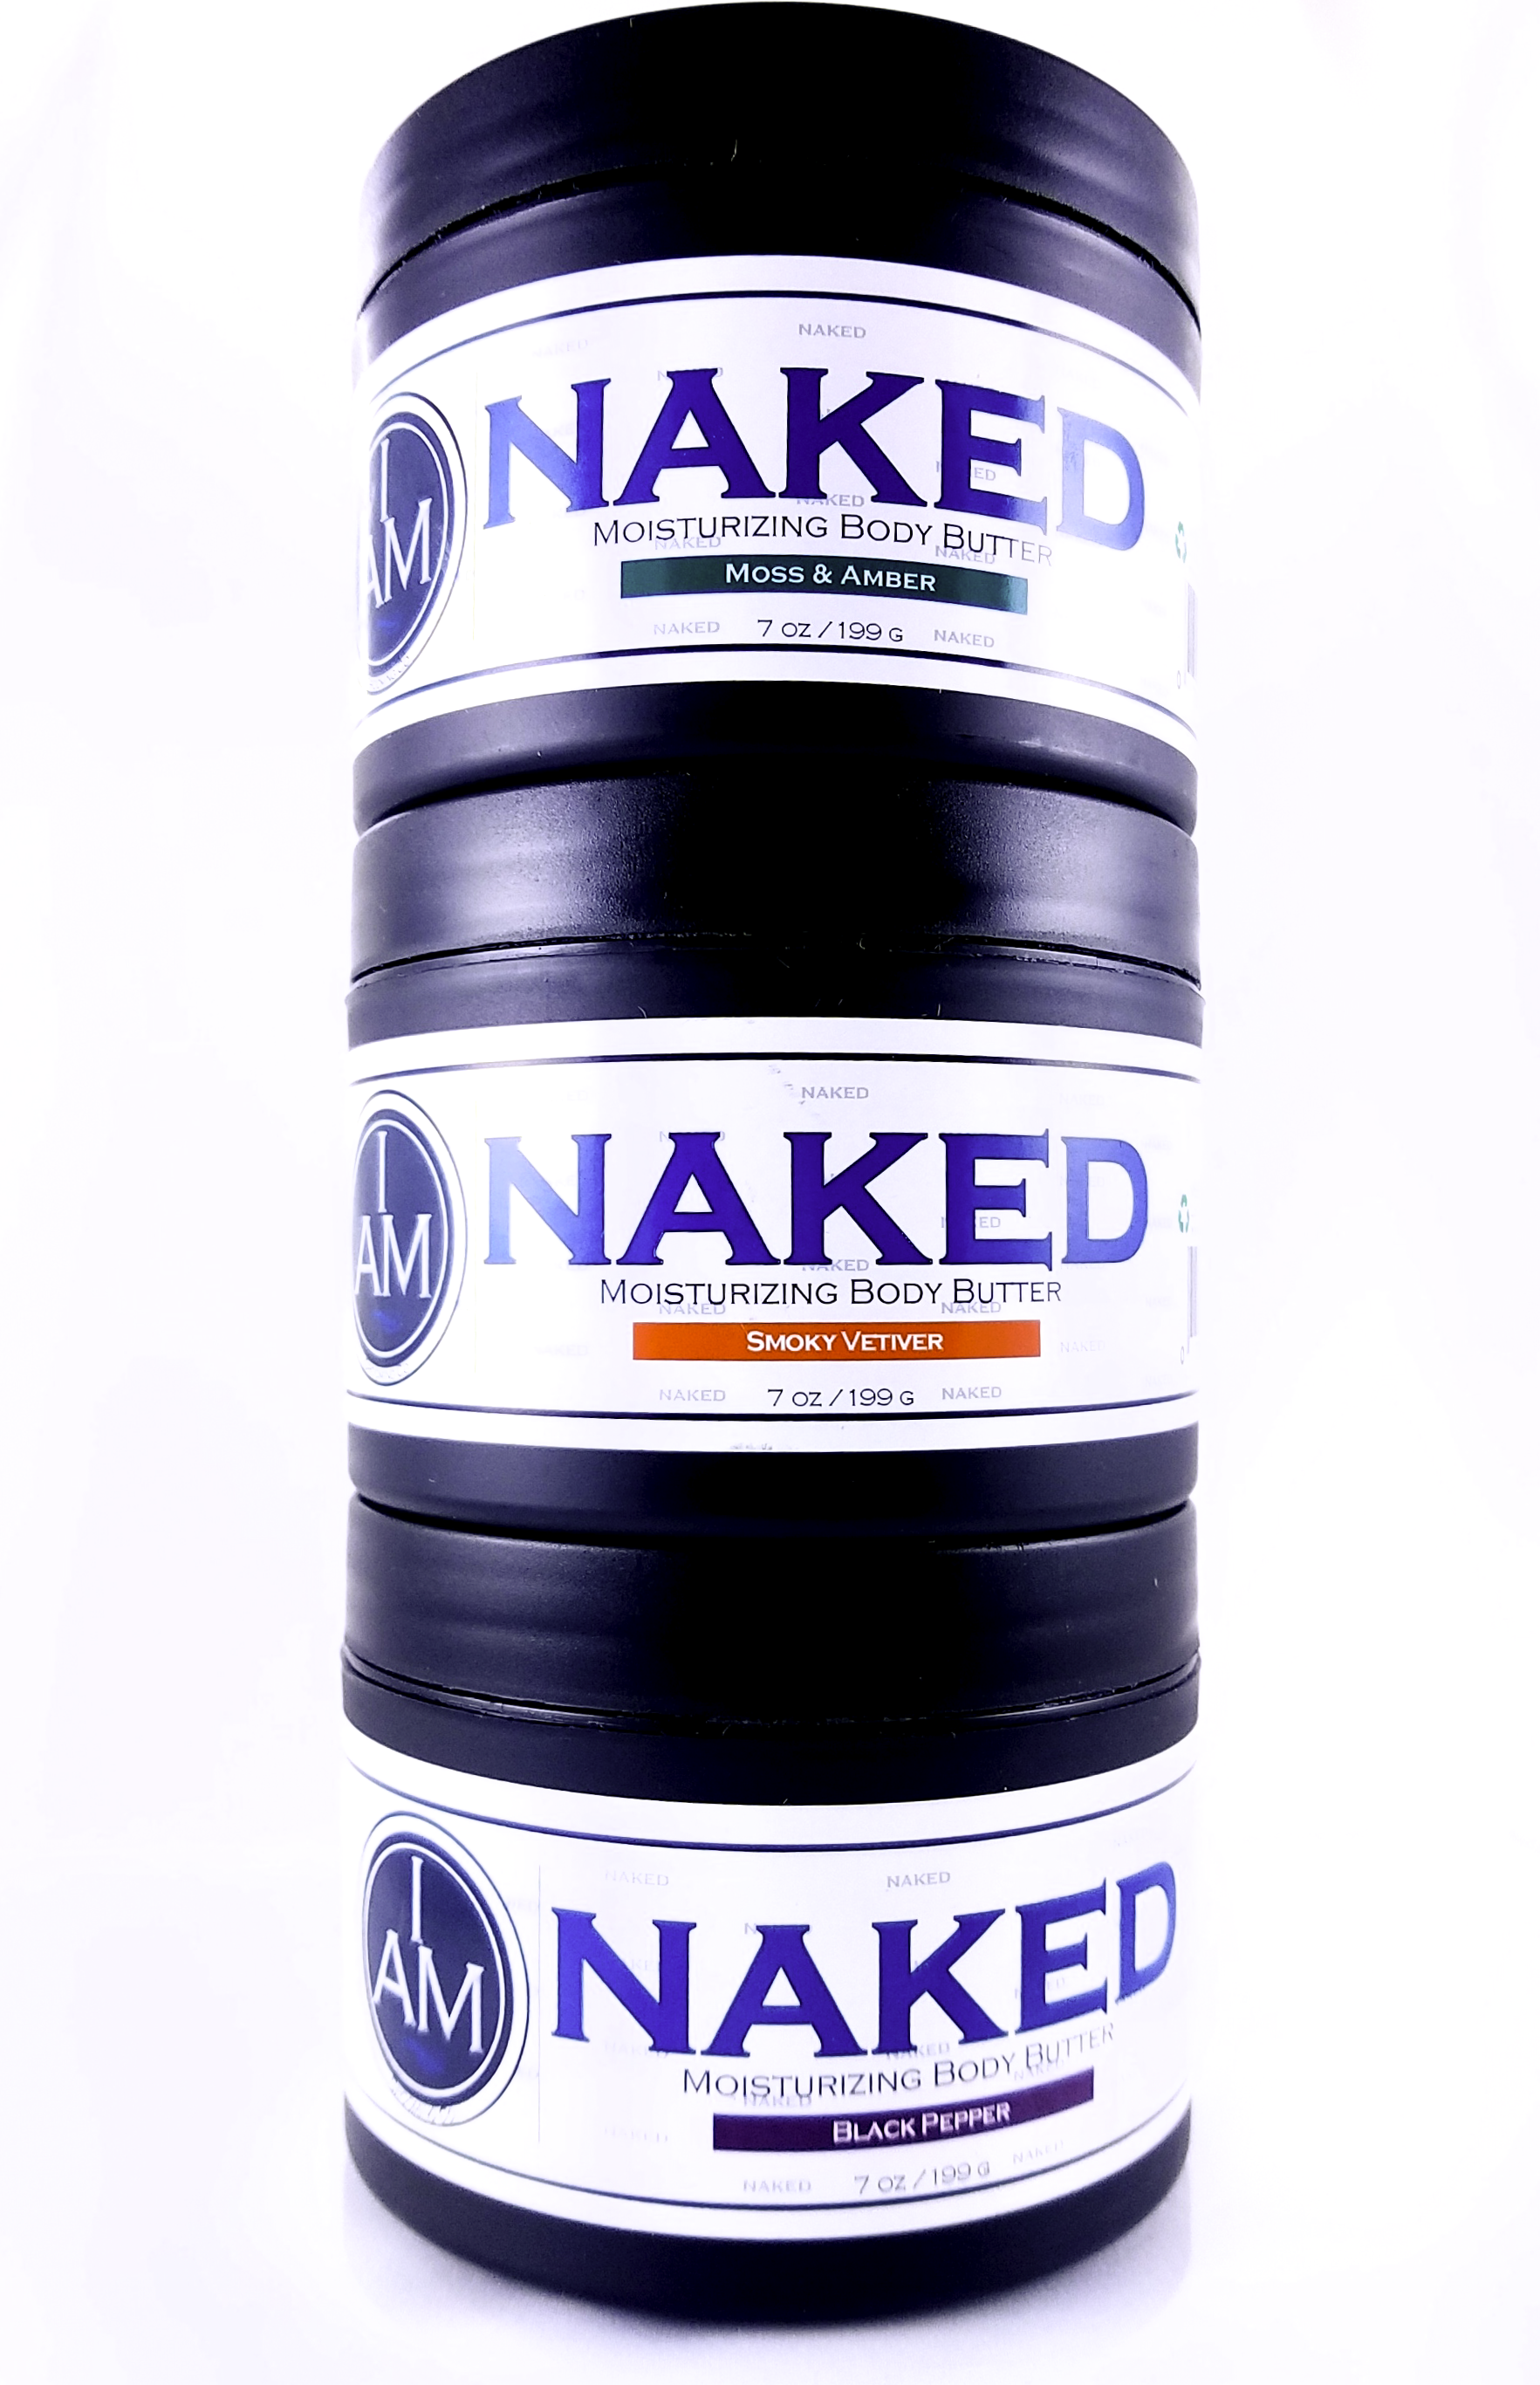 I AM Naked - Moisturizing Body Butter ~ Honey Almond Nectar